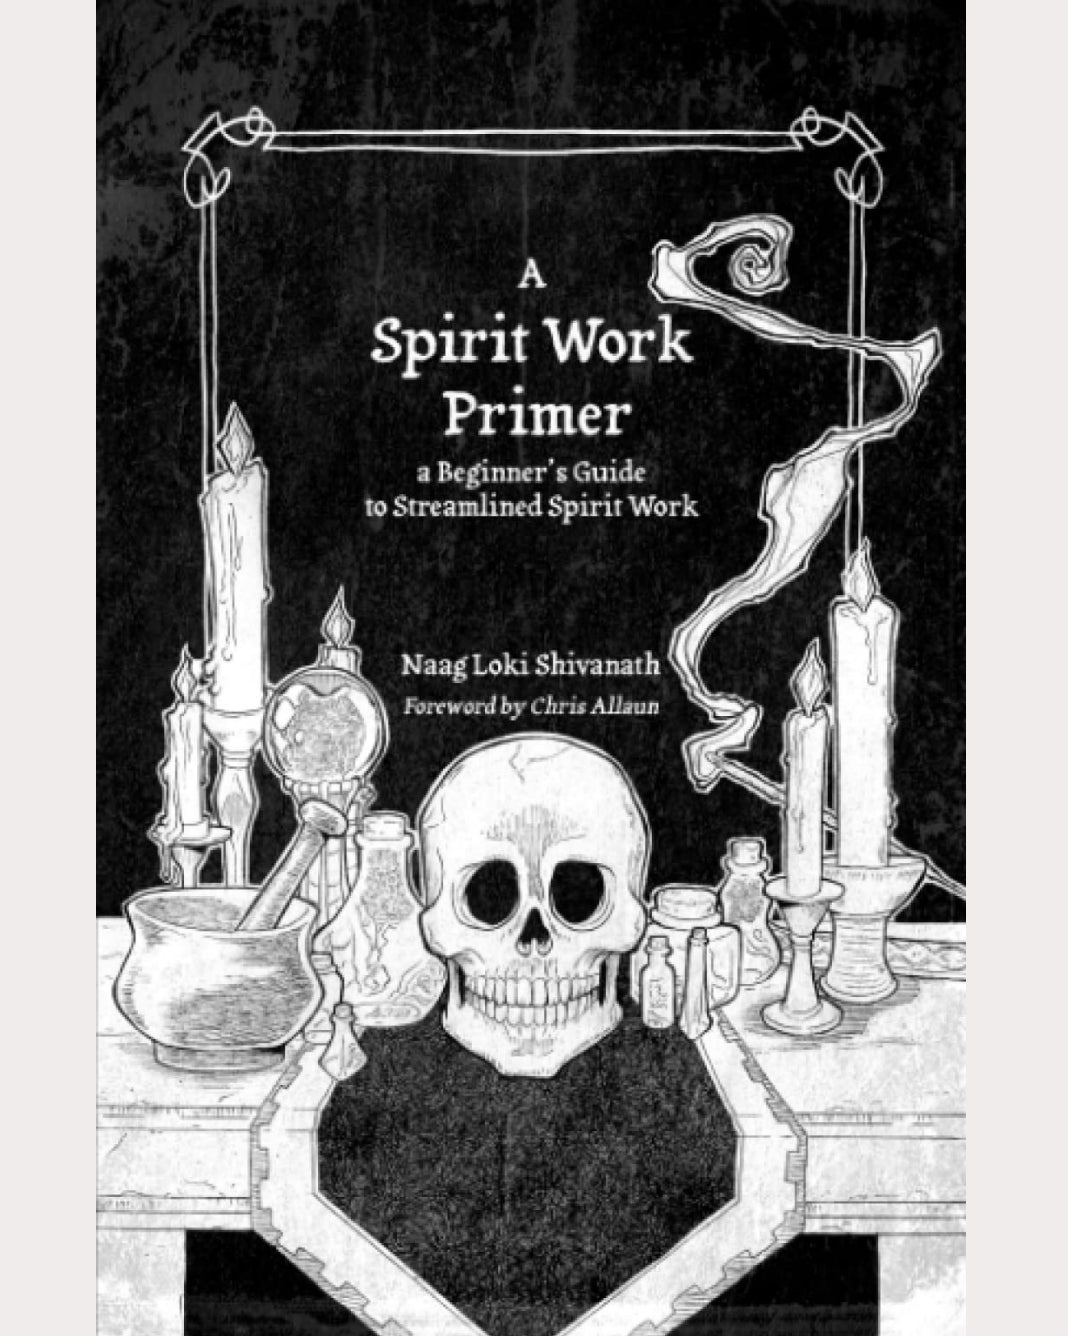 A Spirit Work Primer